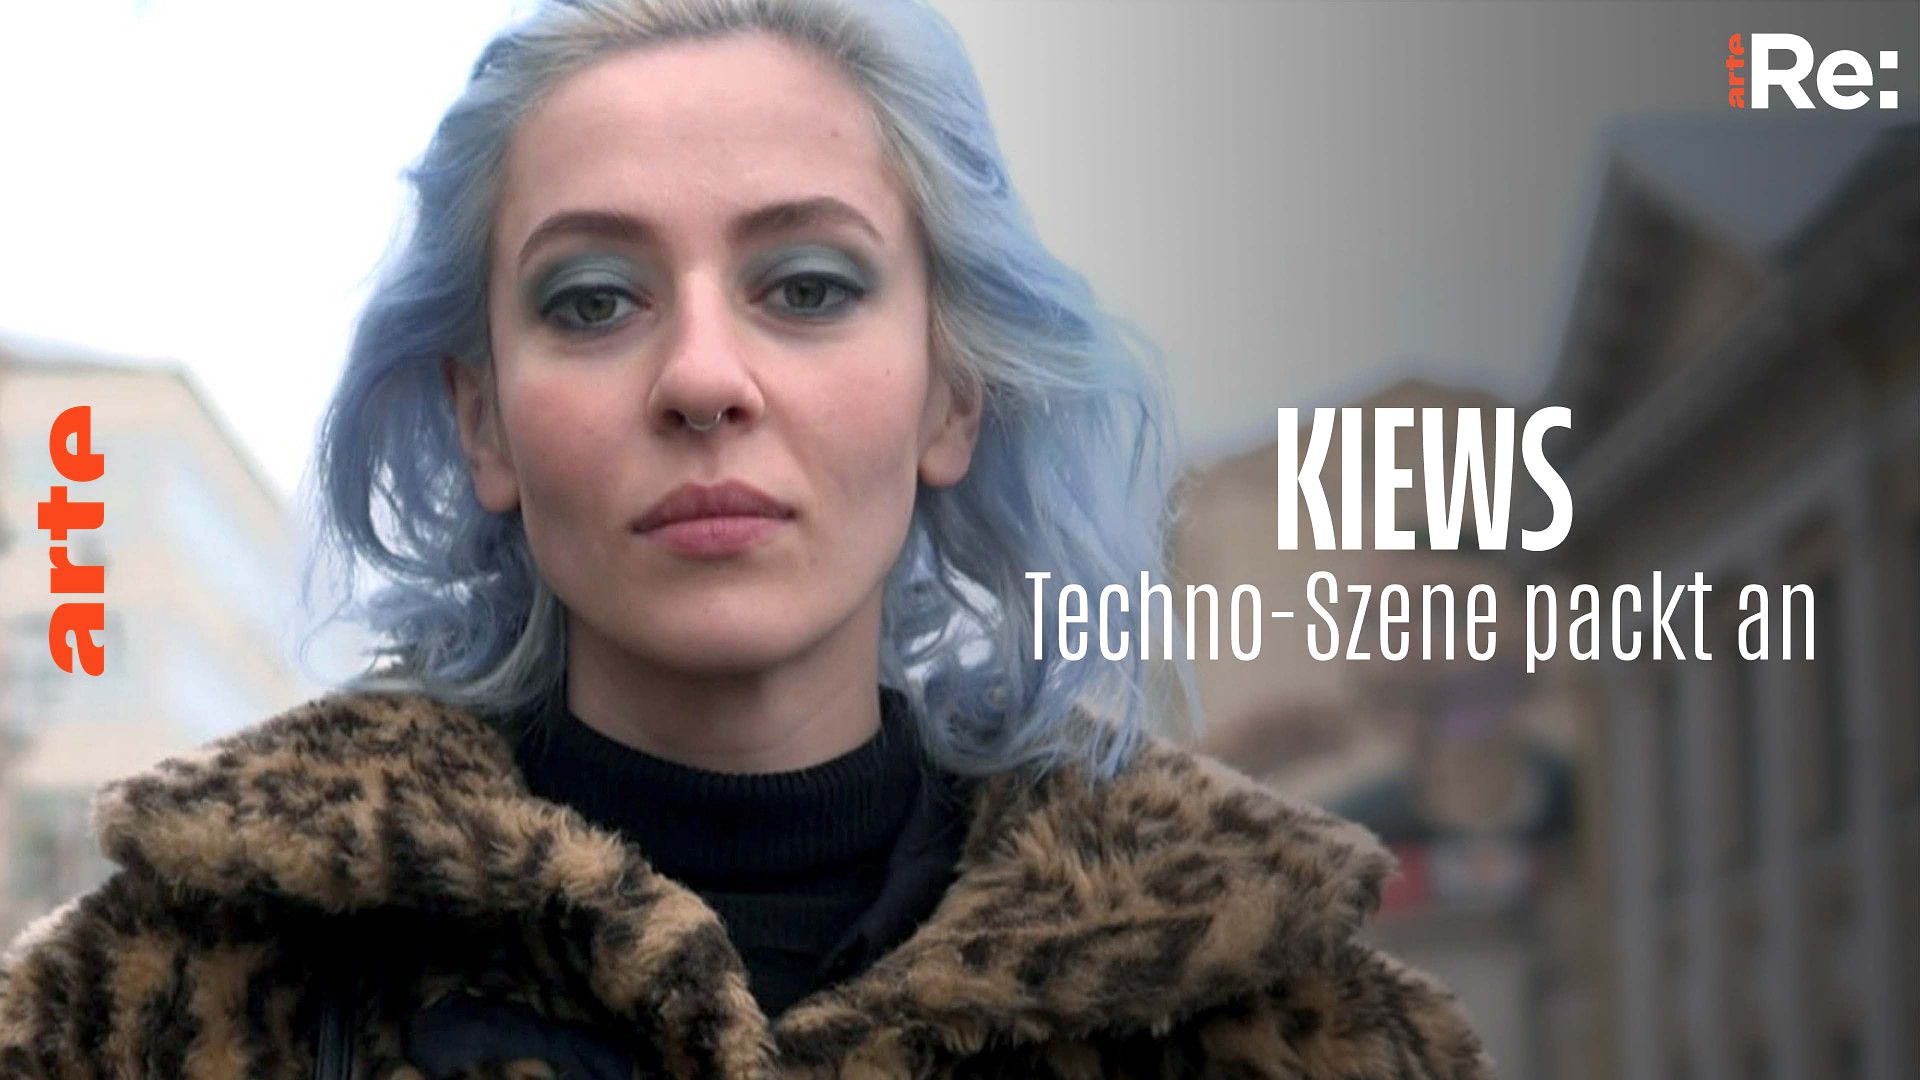 Re: Kiews Techno-Szene packt an - Wiederaufbau mit Beats - Die ganze Doku | ARTE